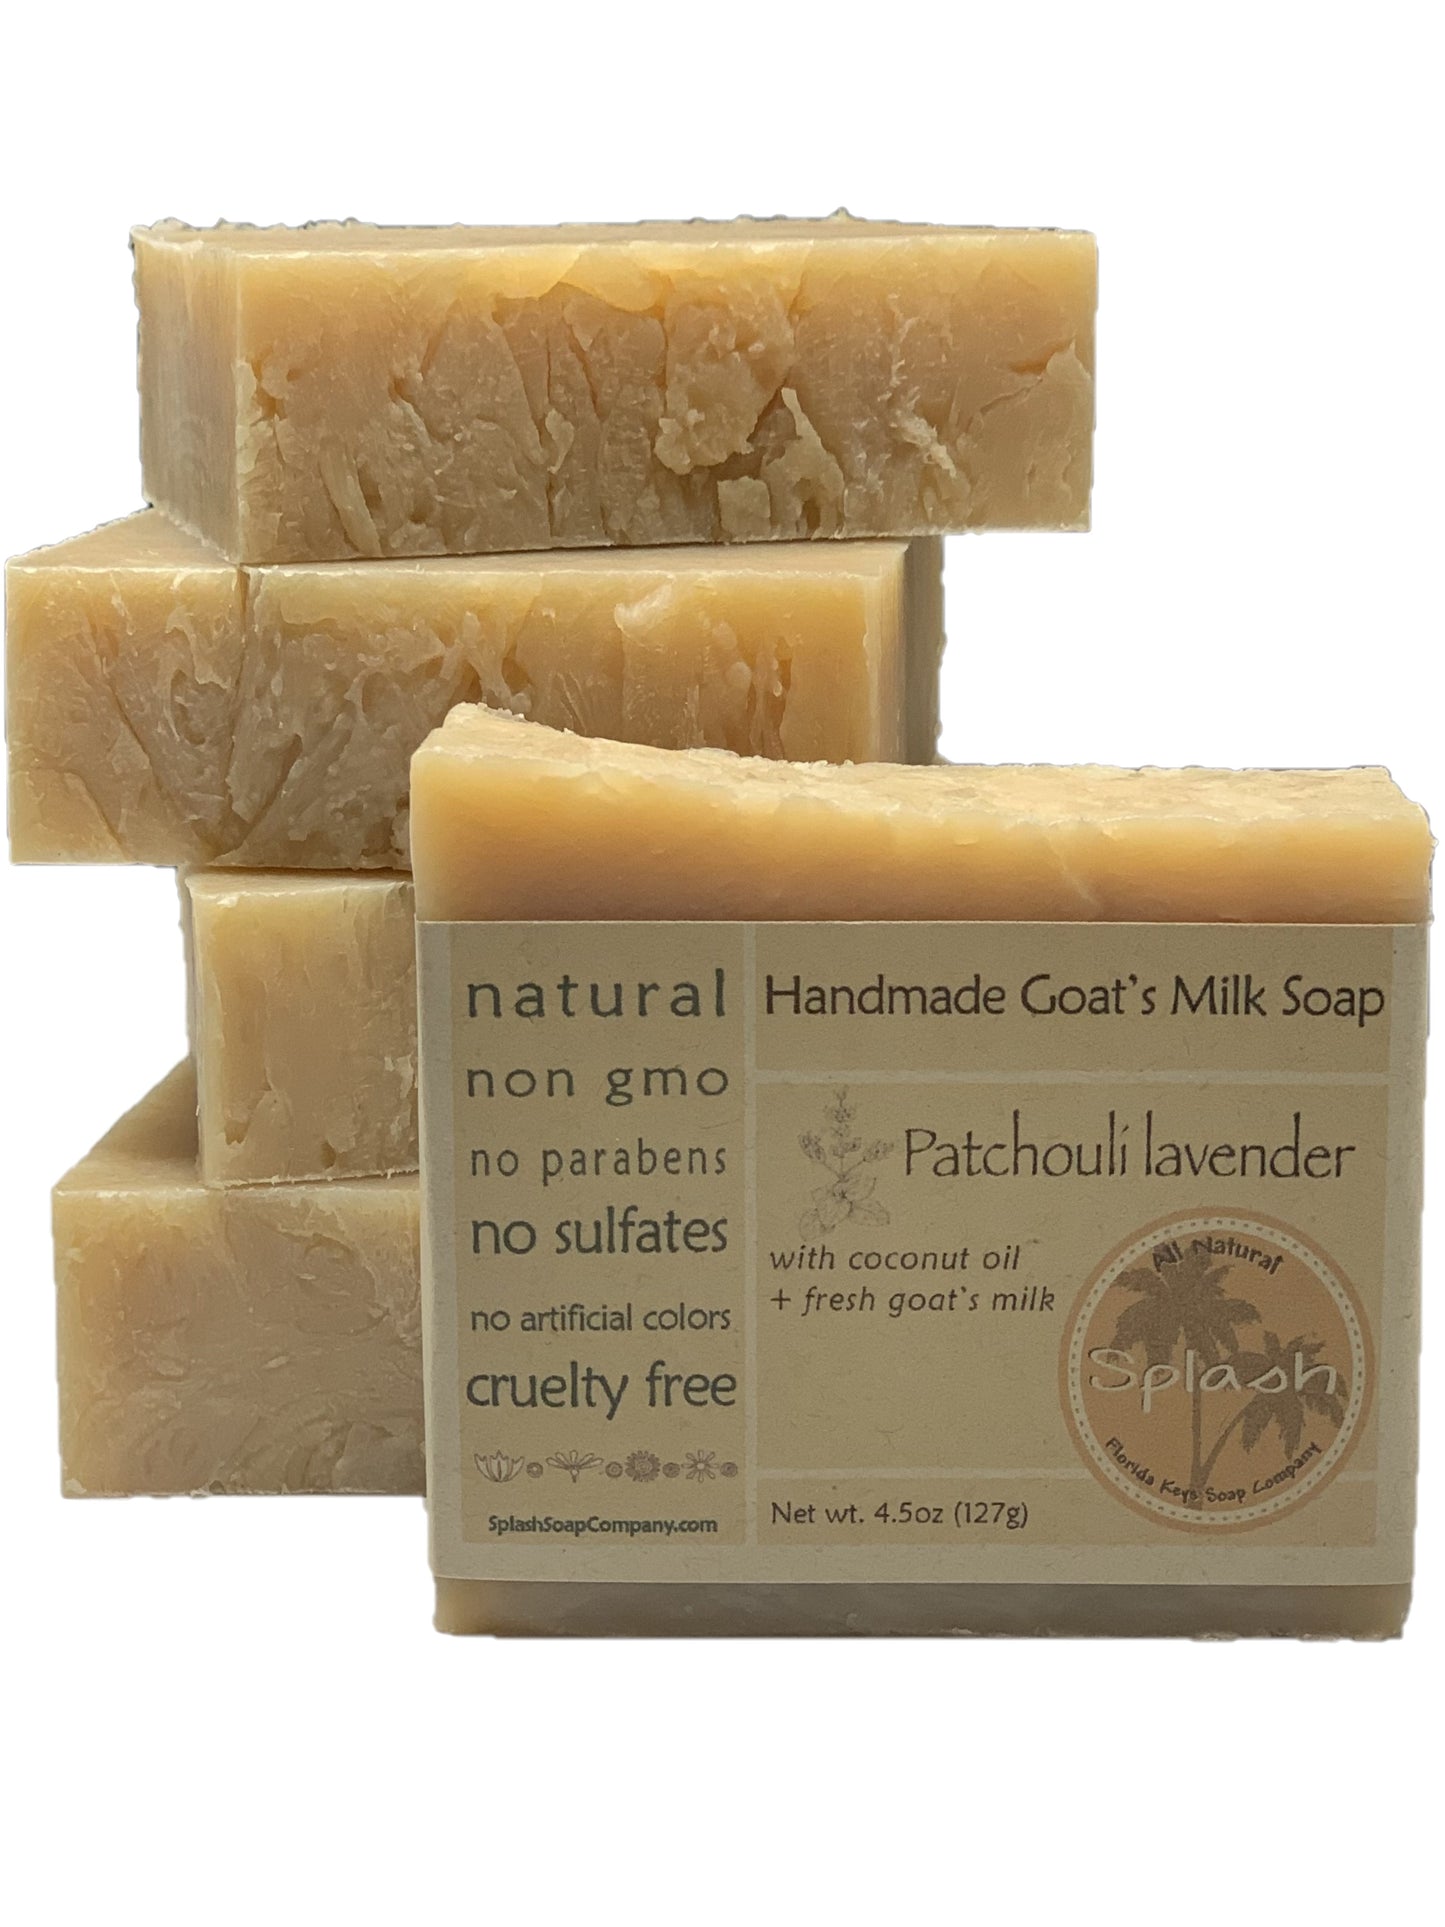 Patchouli Lavender - Splash Soap Company